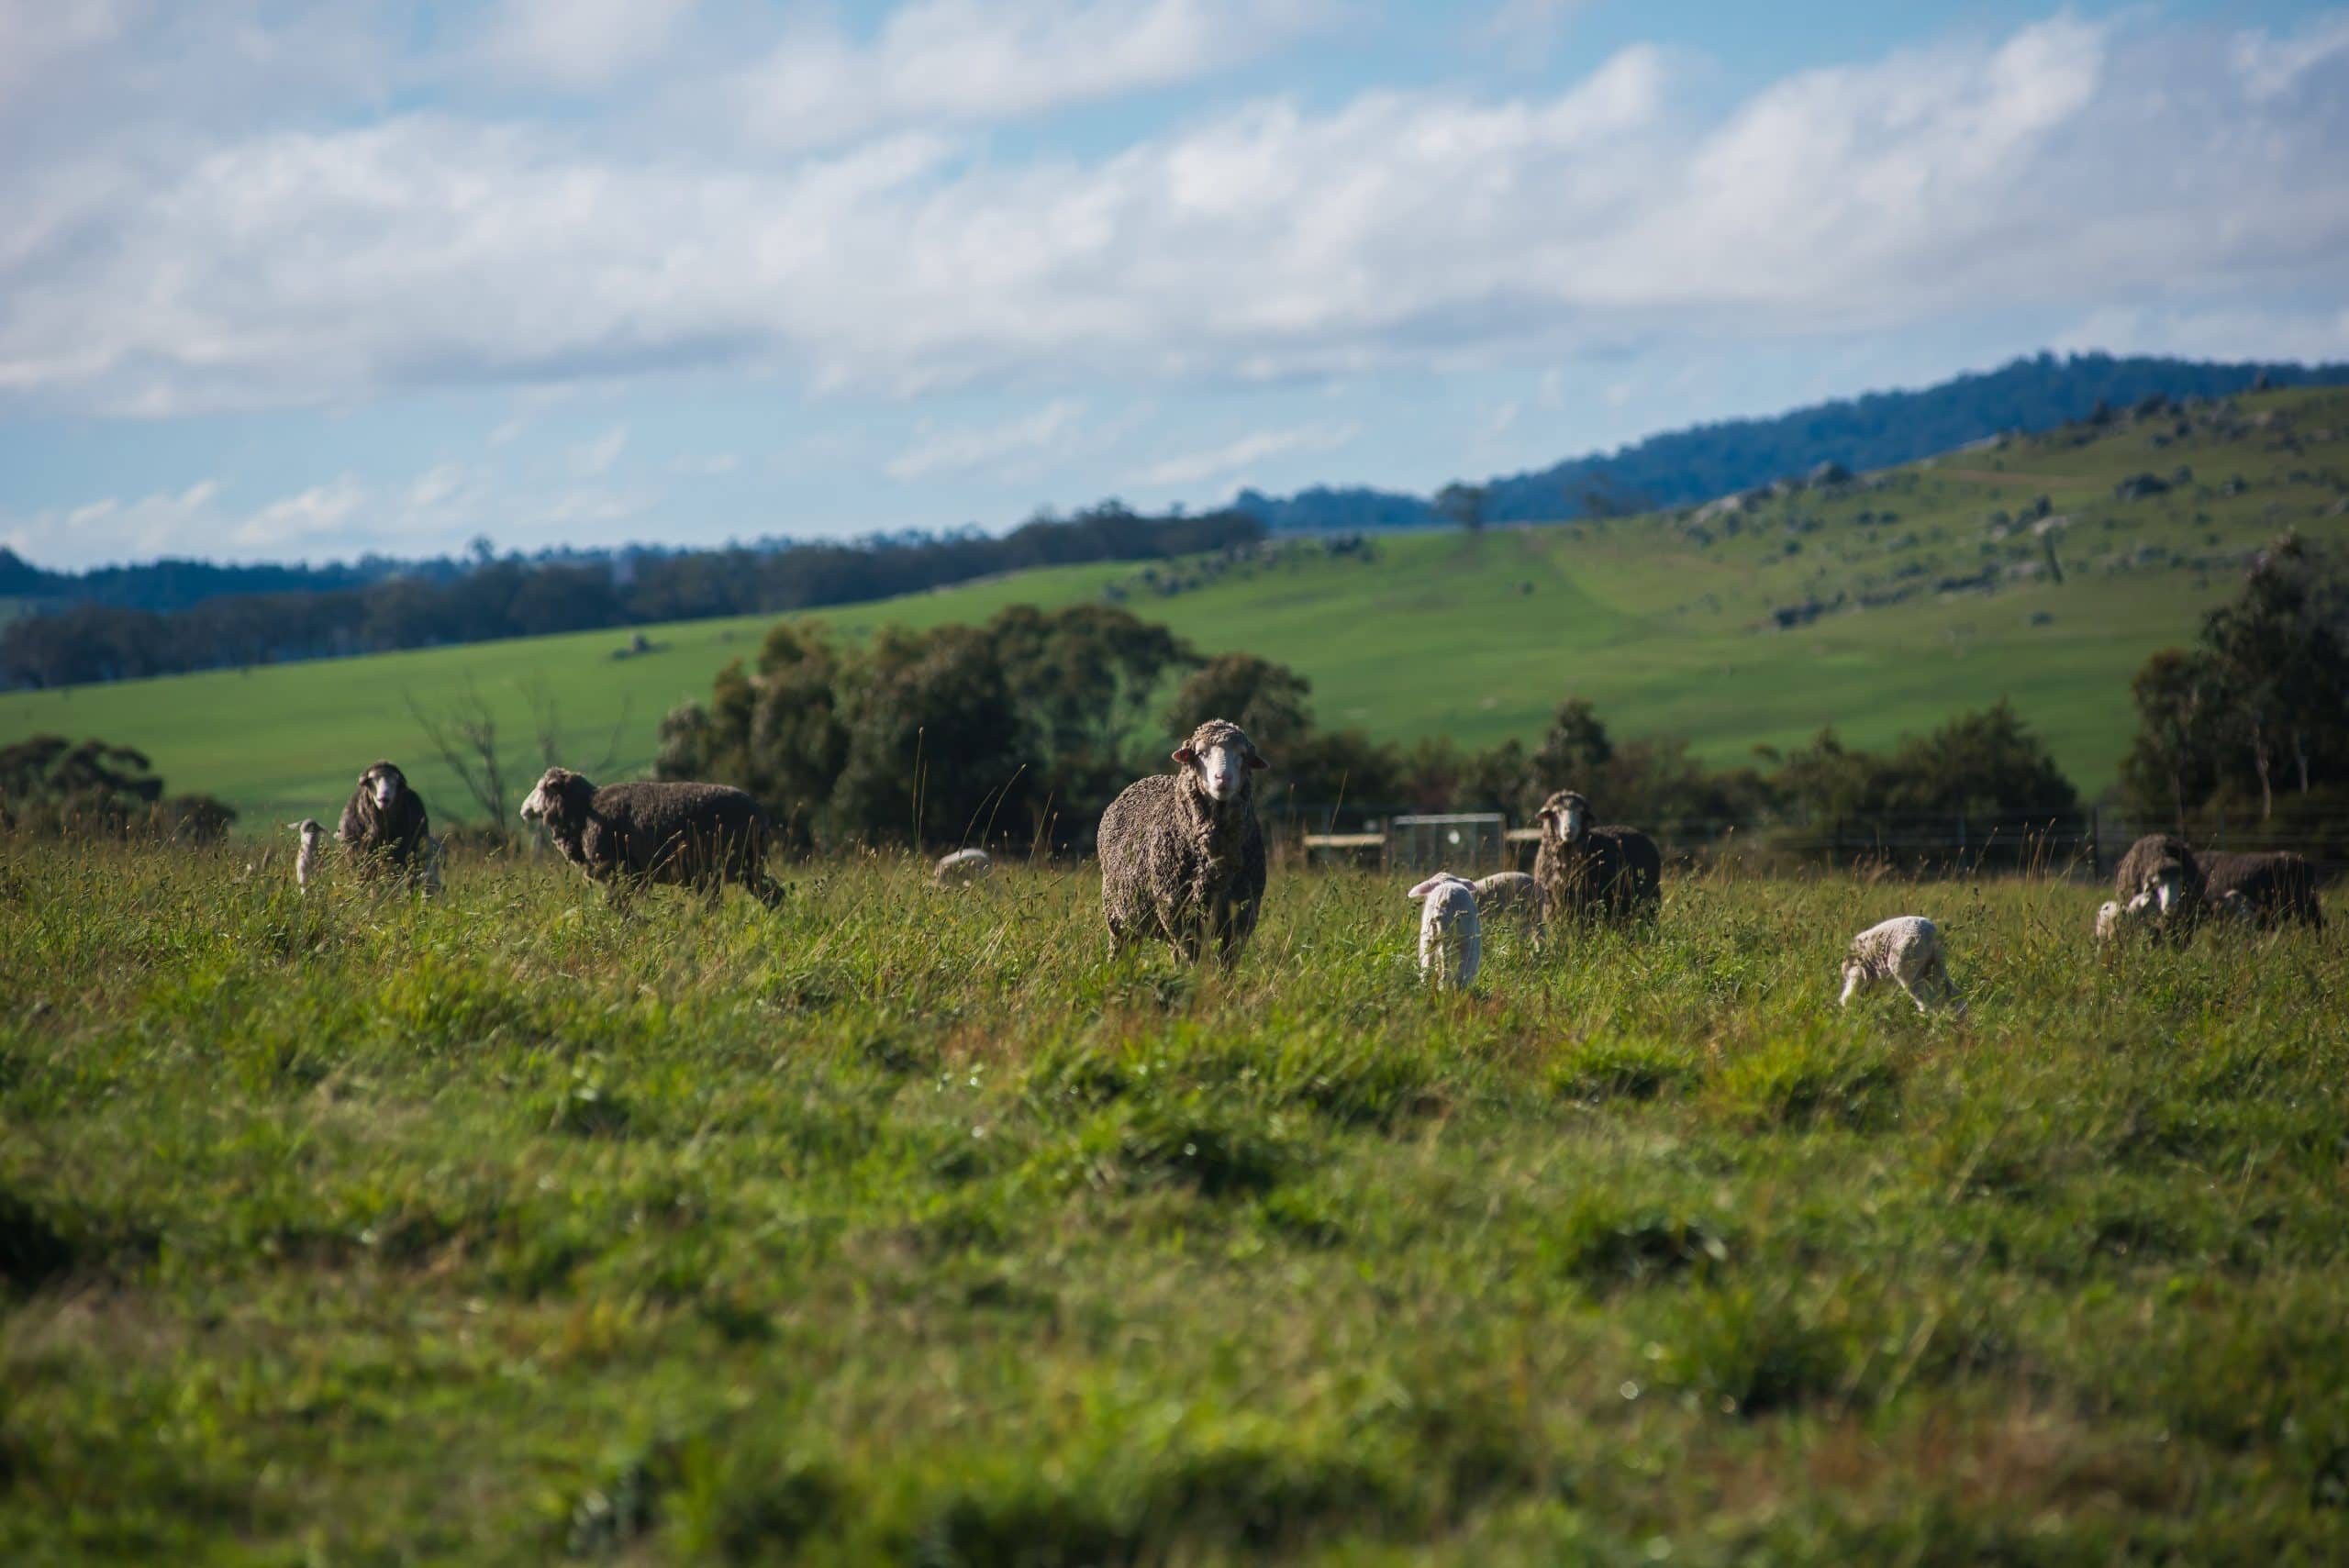 Avington merino sheep in a green paddock